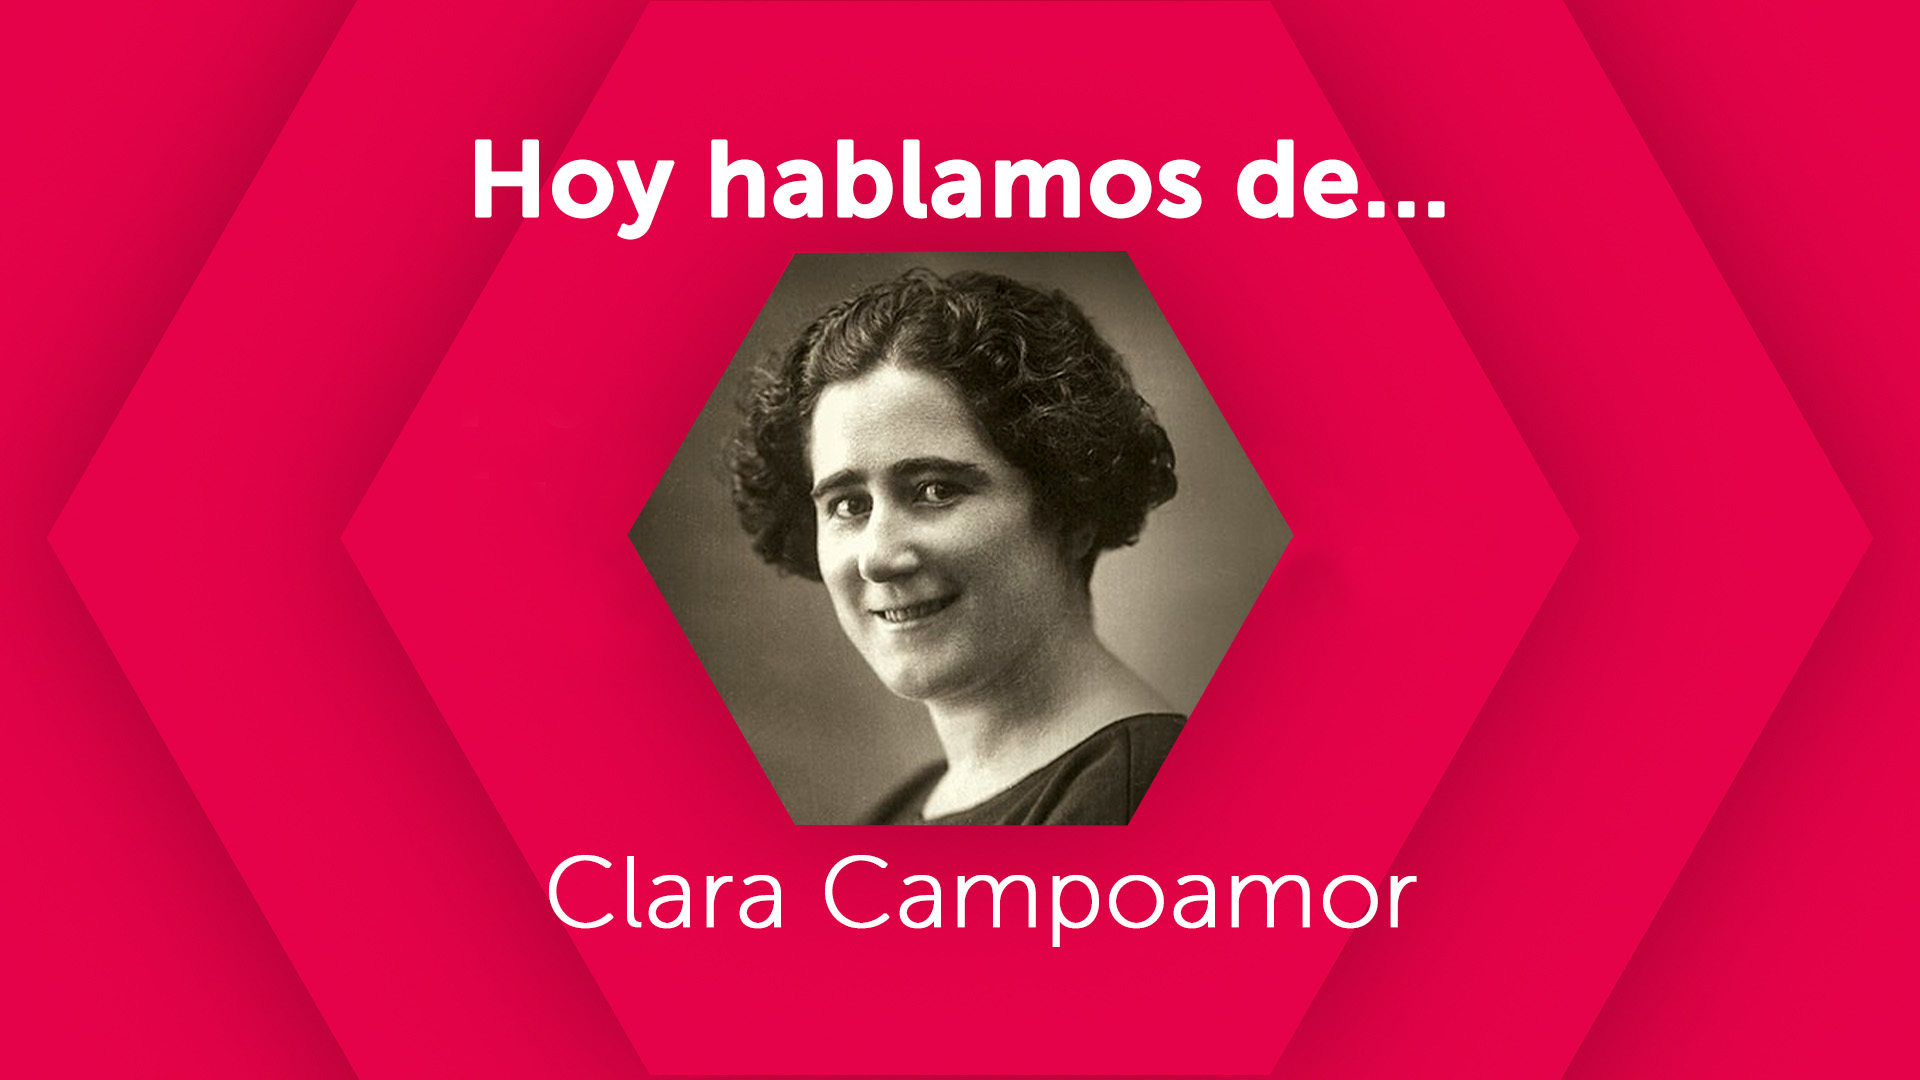 Hoy hablamos de Clara Campoamor